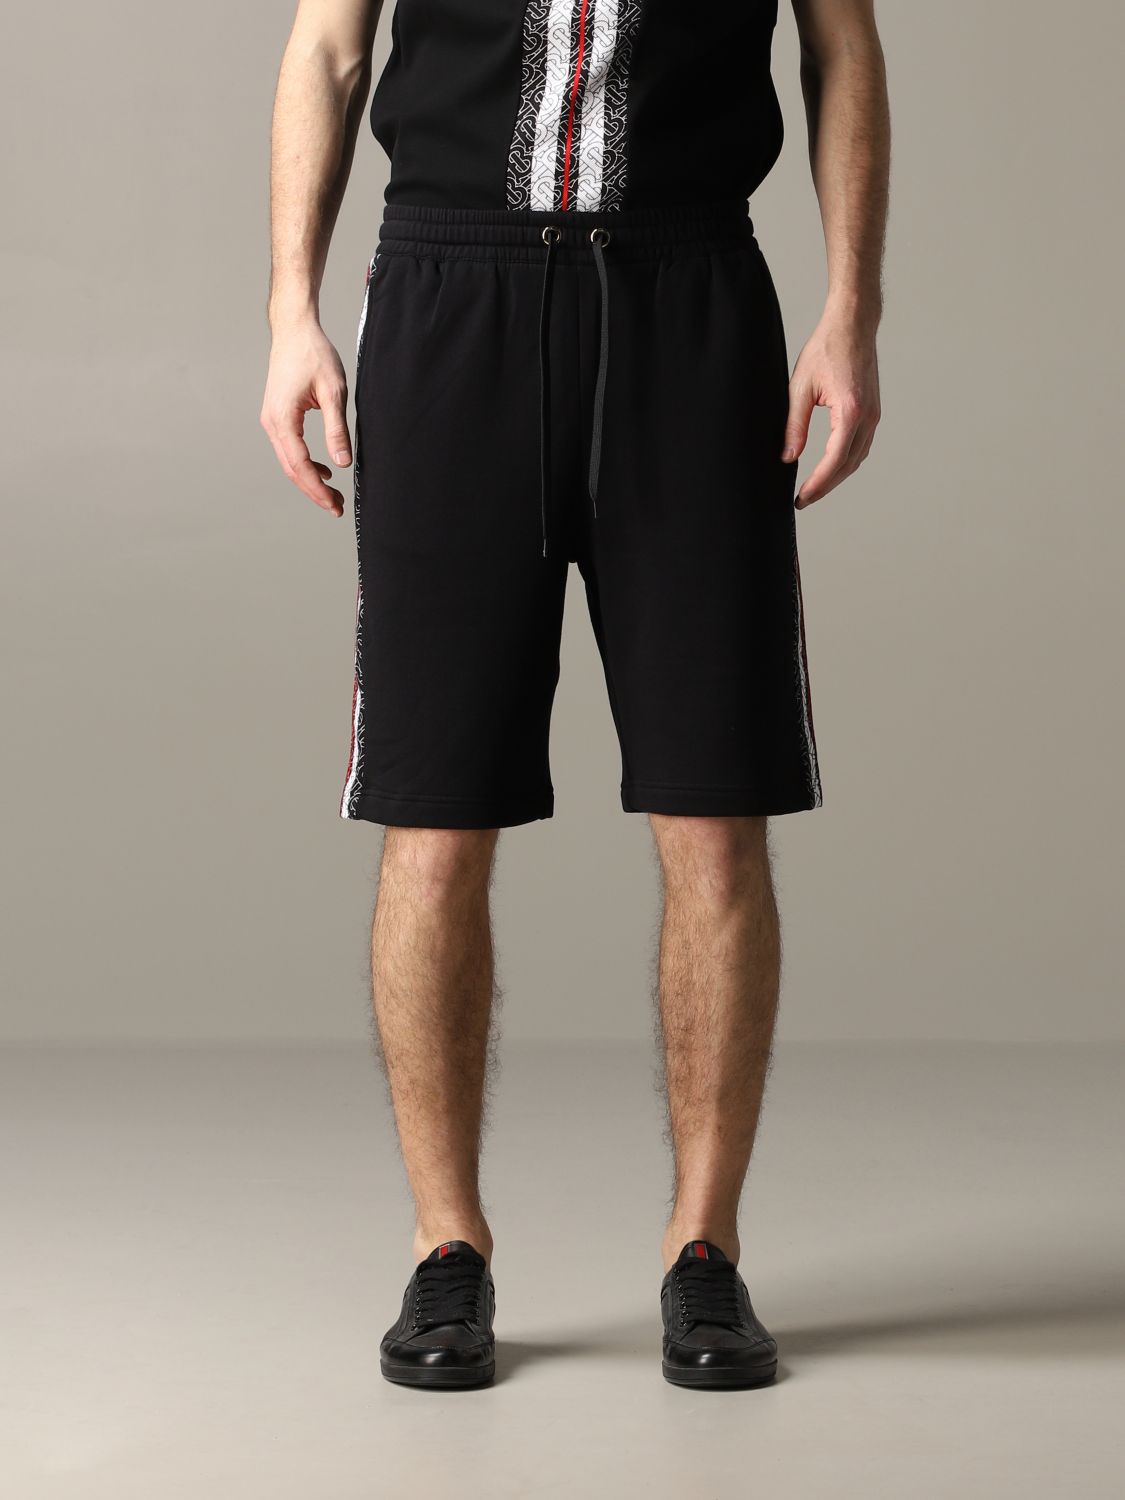 burberry bermuda shorts